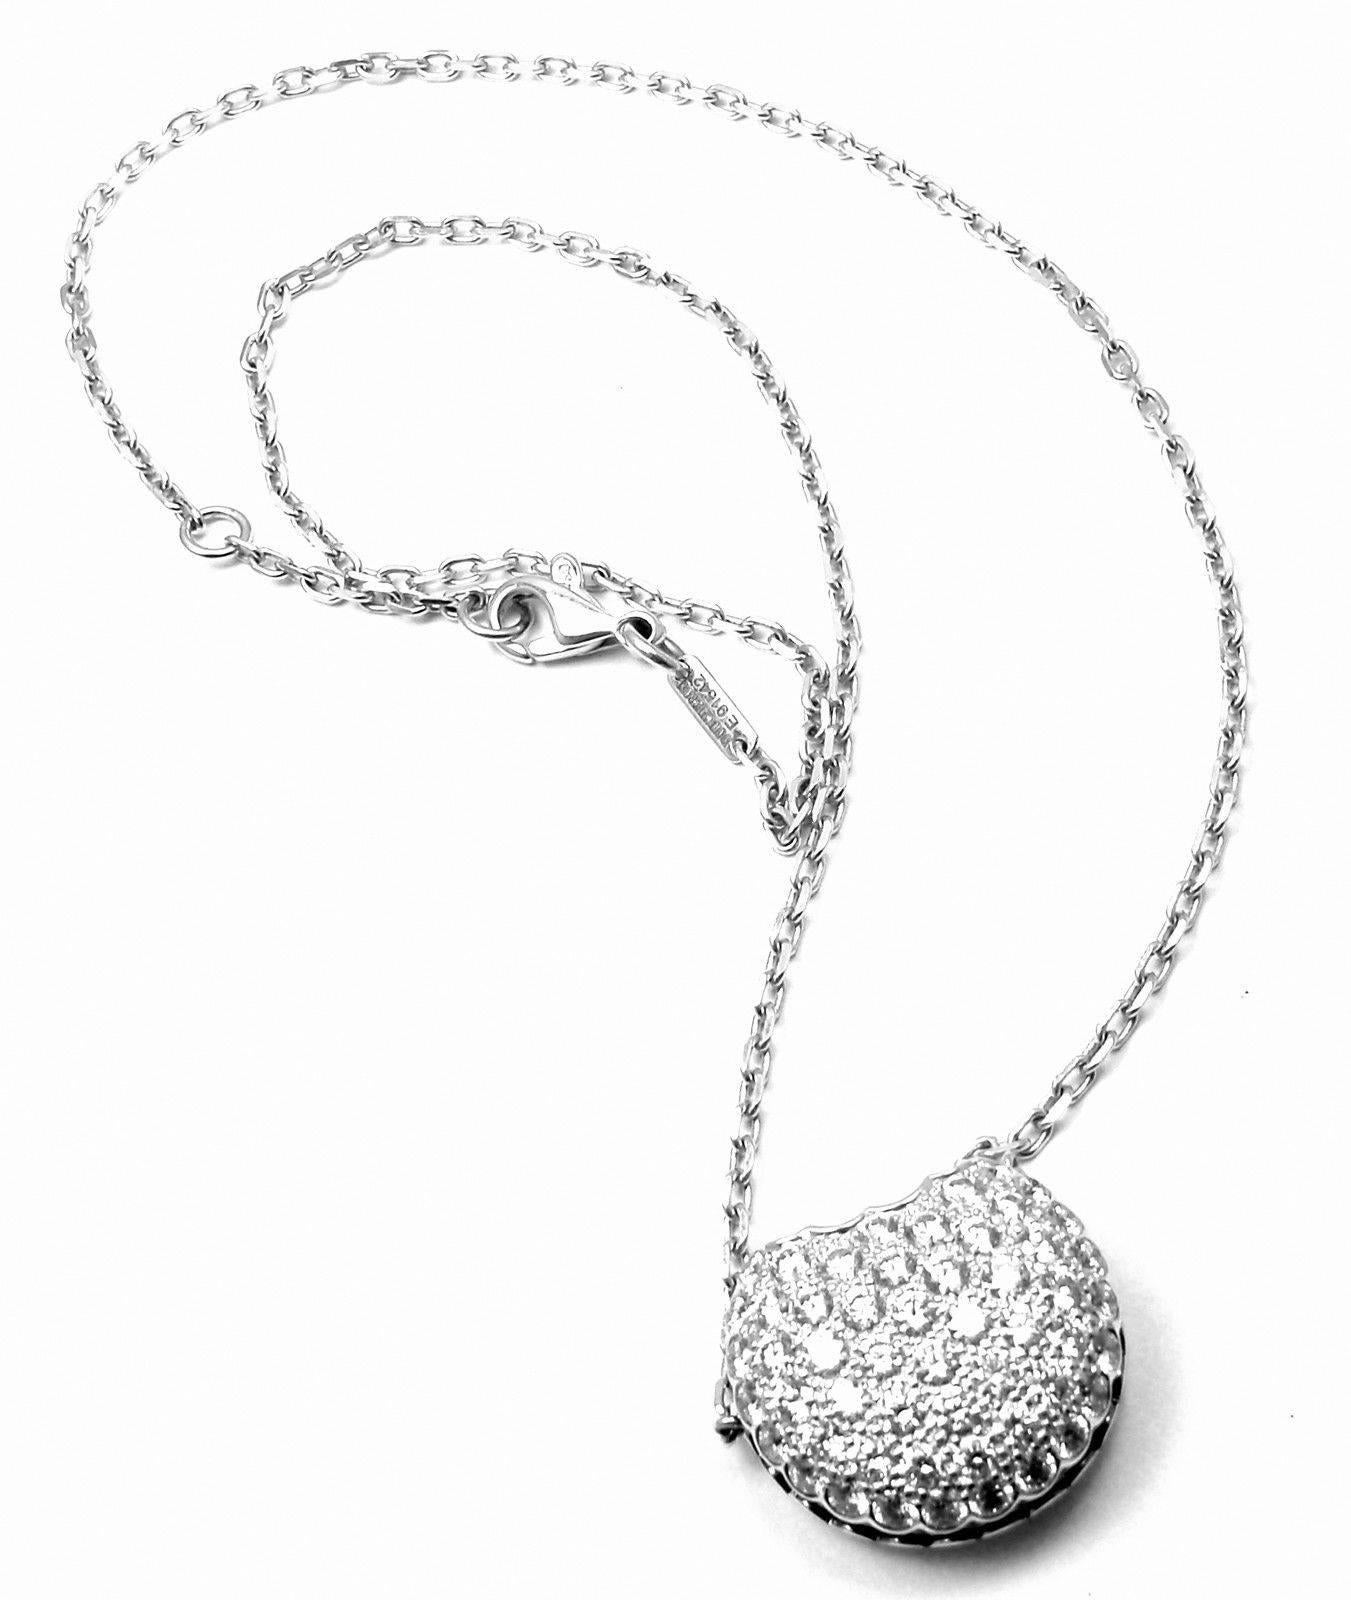 18K White Gold Macaron Diamond Large Pendant Necklace by Boucheron Paris. 
With 54 round brilliant cut diamonds VS1 clarity, E color, total weight approx. 2.5ct

Details: 
Measurements: Pendant: 21mm x 19mm
Chain: Length 16.5" Width: